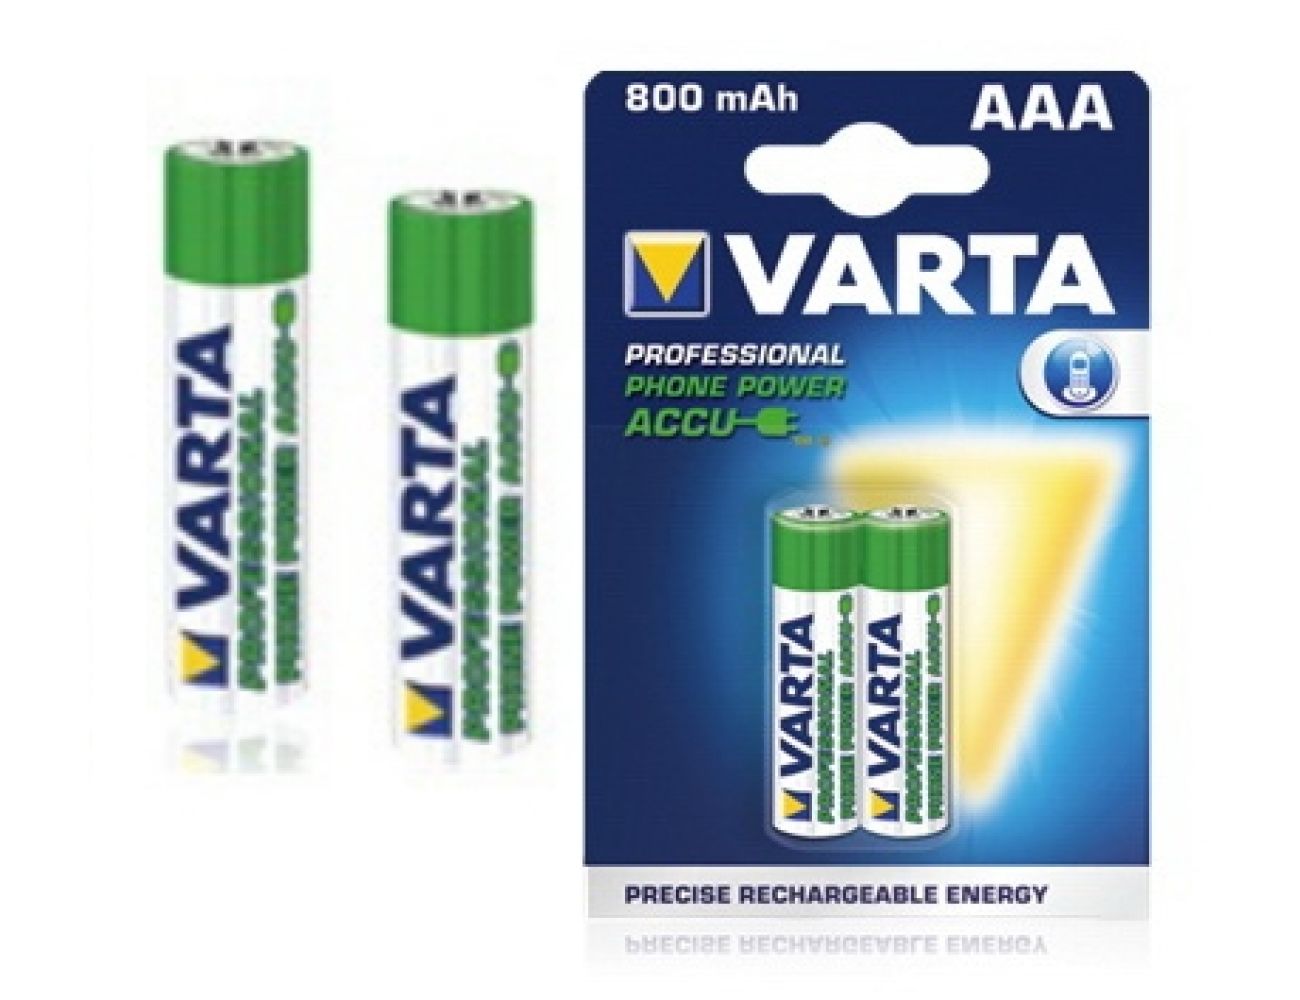 Аккумуляторные батарейки ААА Varta 800 mAh Professional Phone Power (HR03, 800 mAh, 1.2V, Ni-Mh)  58398101402